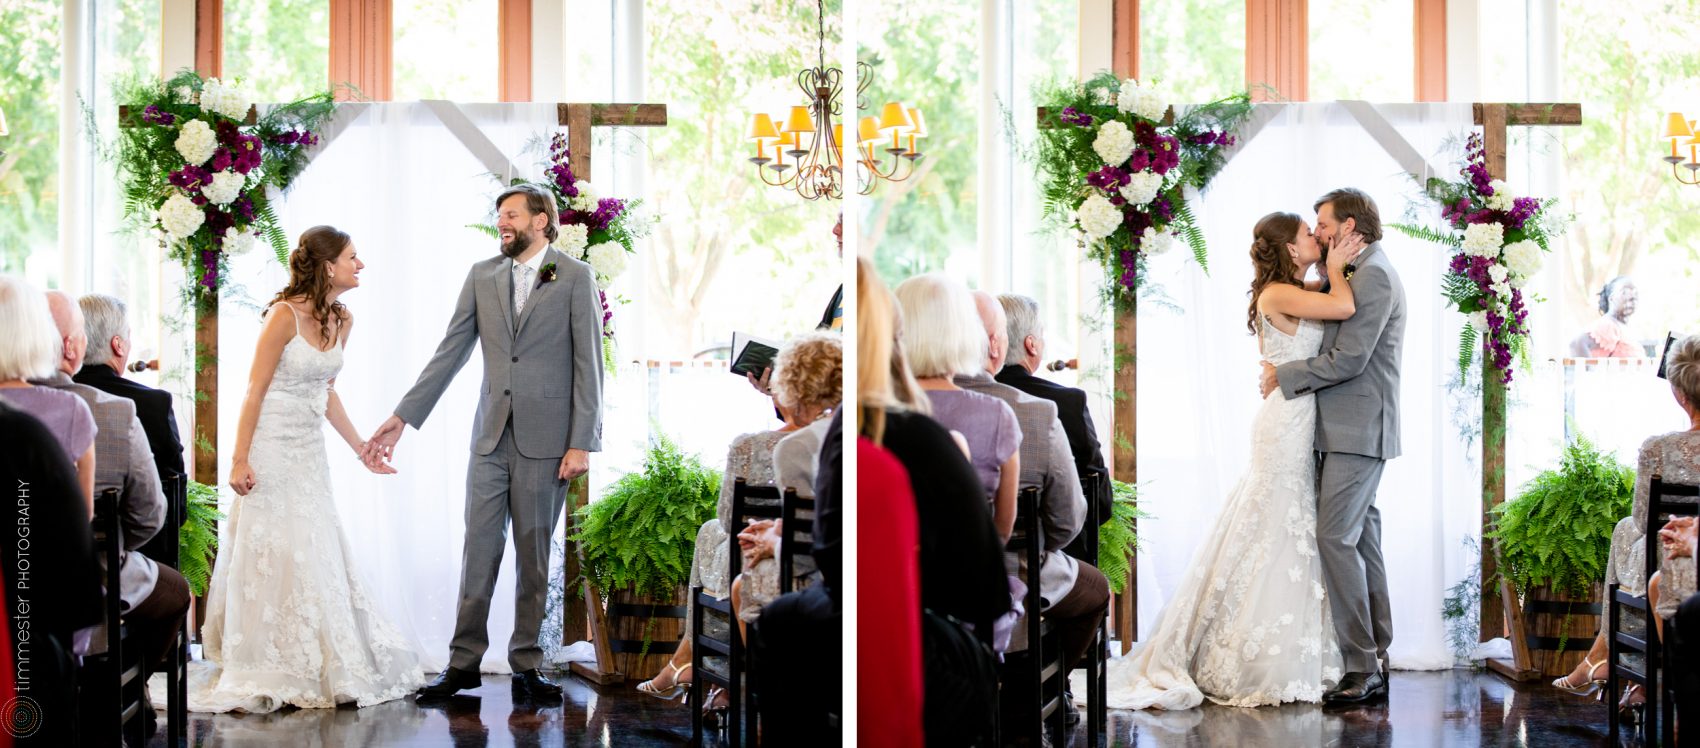 A wonderful indoor wedding ceremony in Raleigh, North Carolina at the restaurant Caffe Luna.